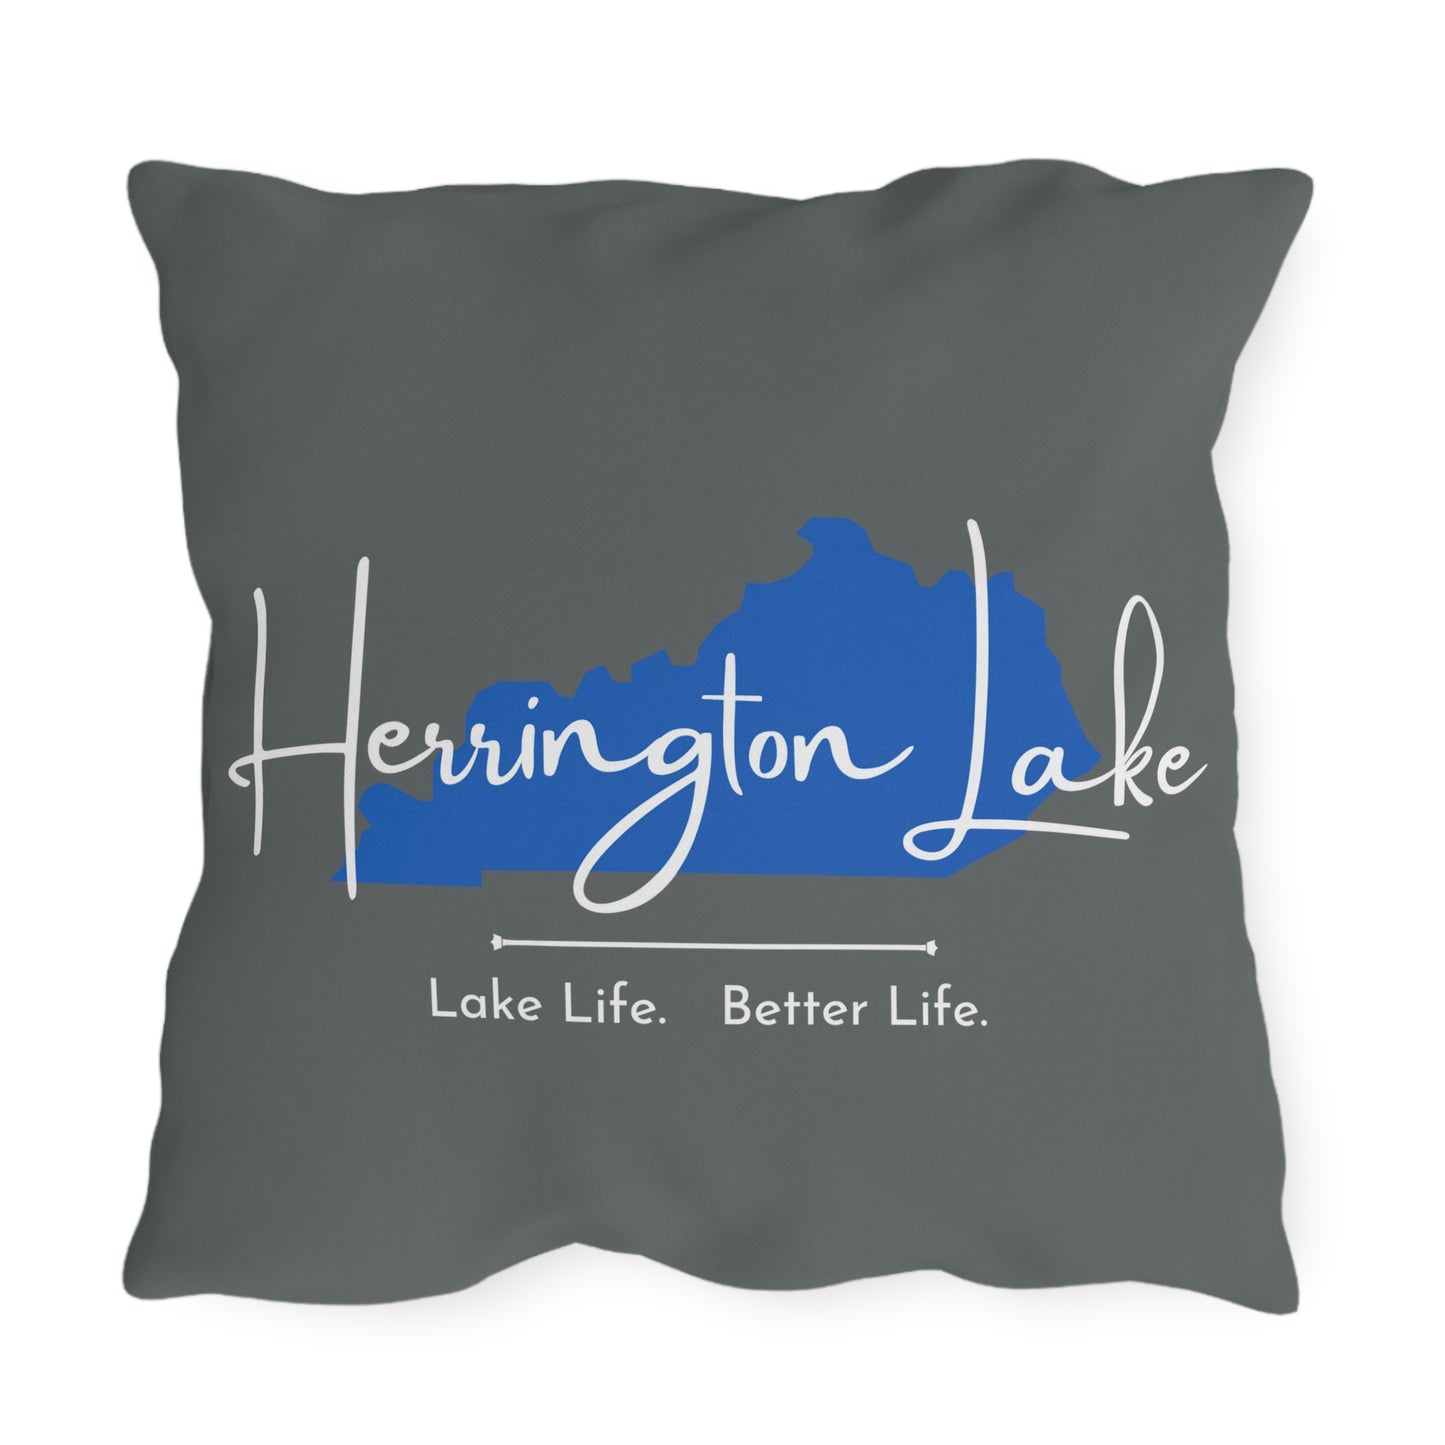 Herrington Lake Signature Collection Outdoor Pillows (Dark Grey)